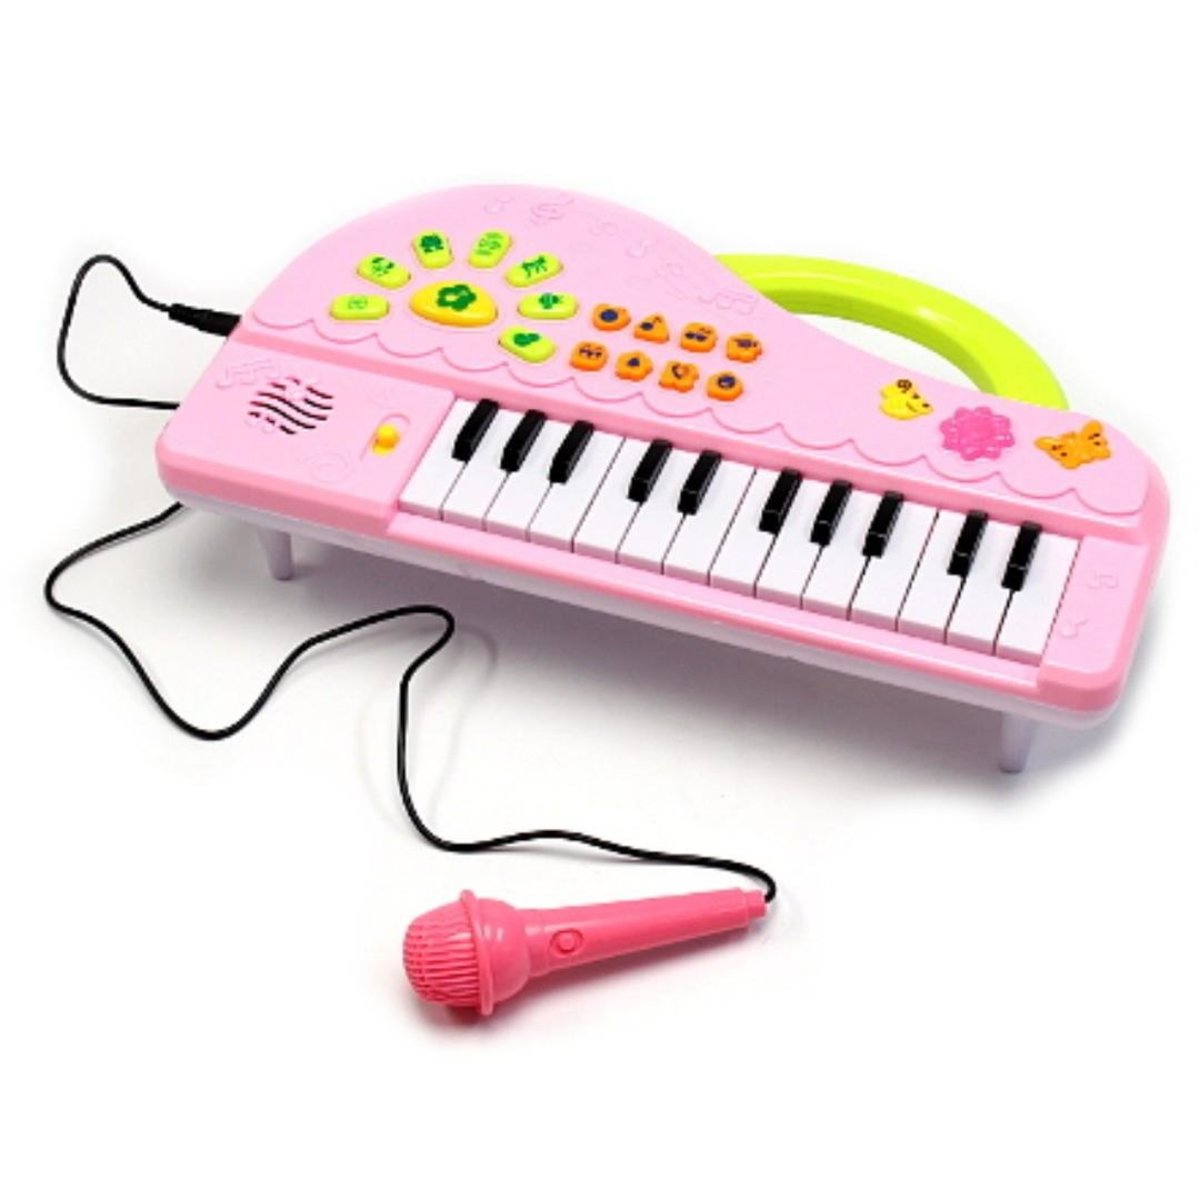 toy musical keyboard